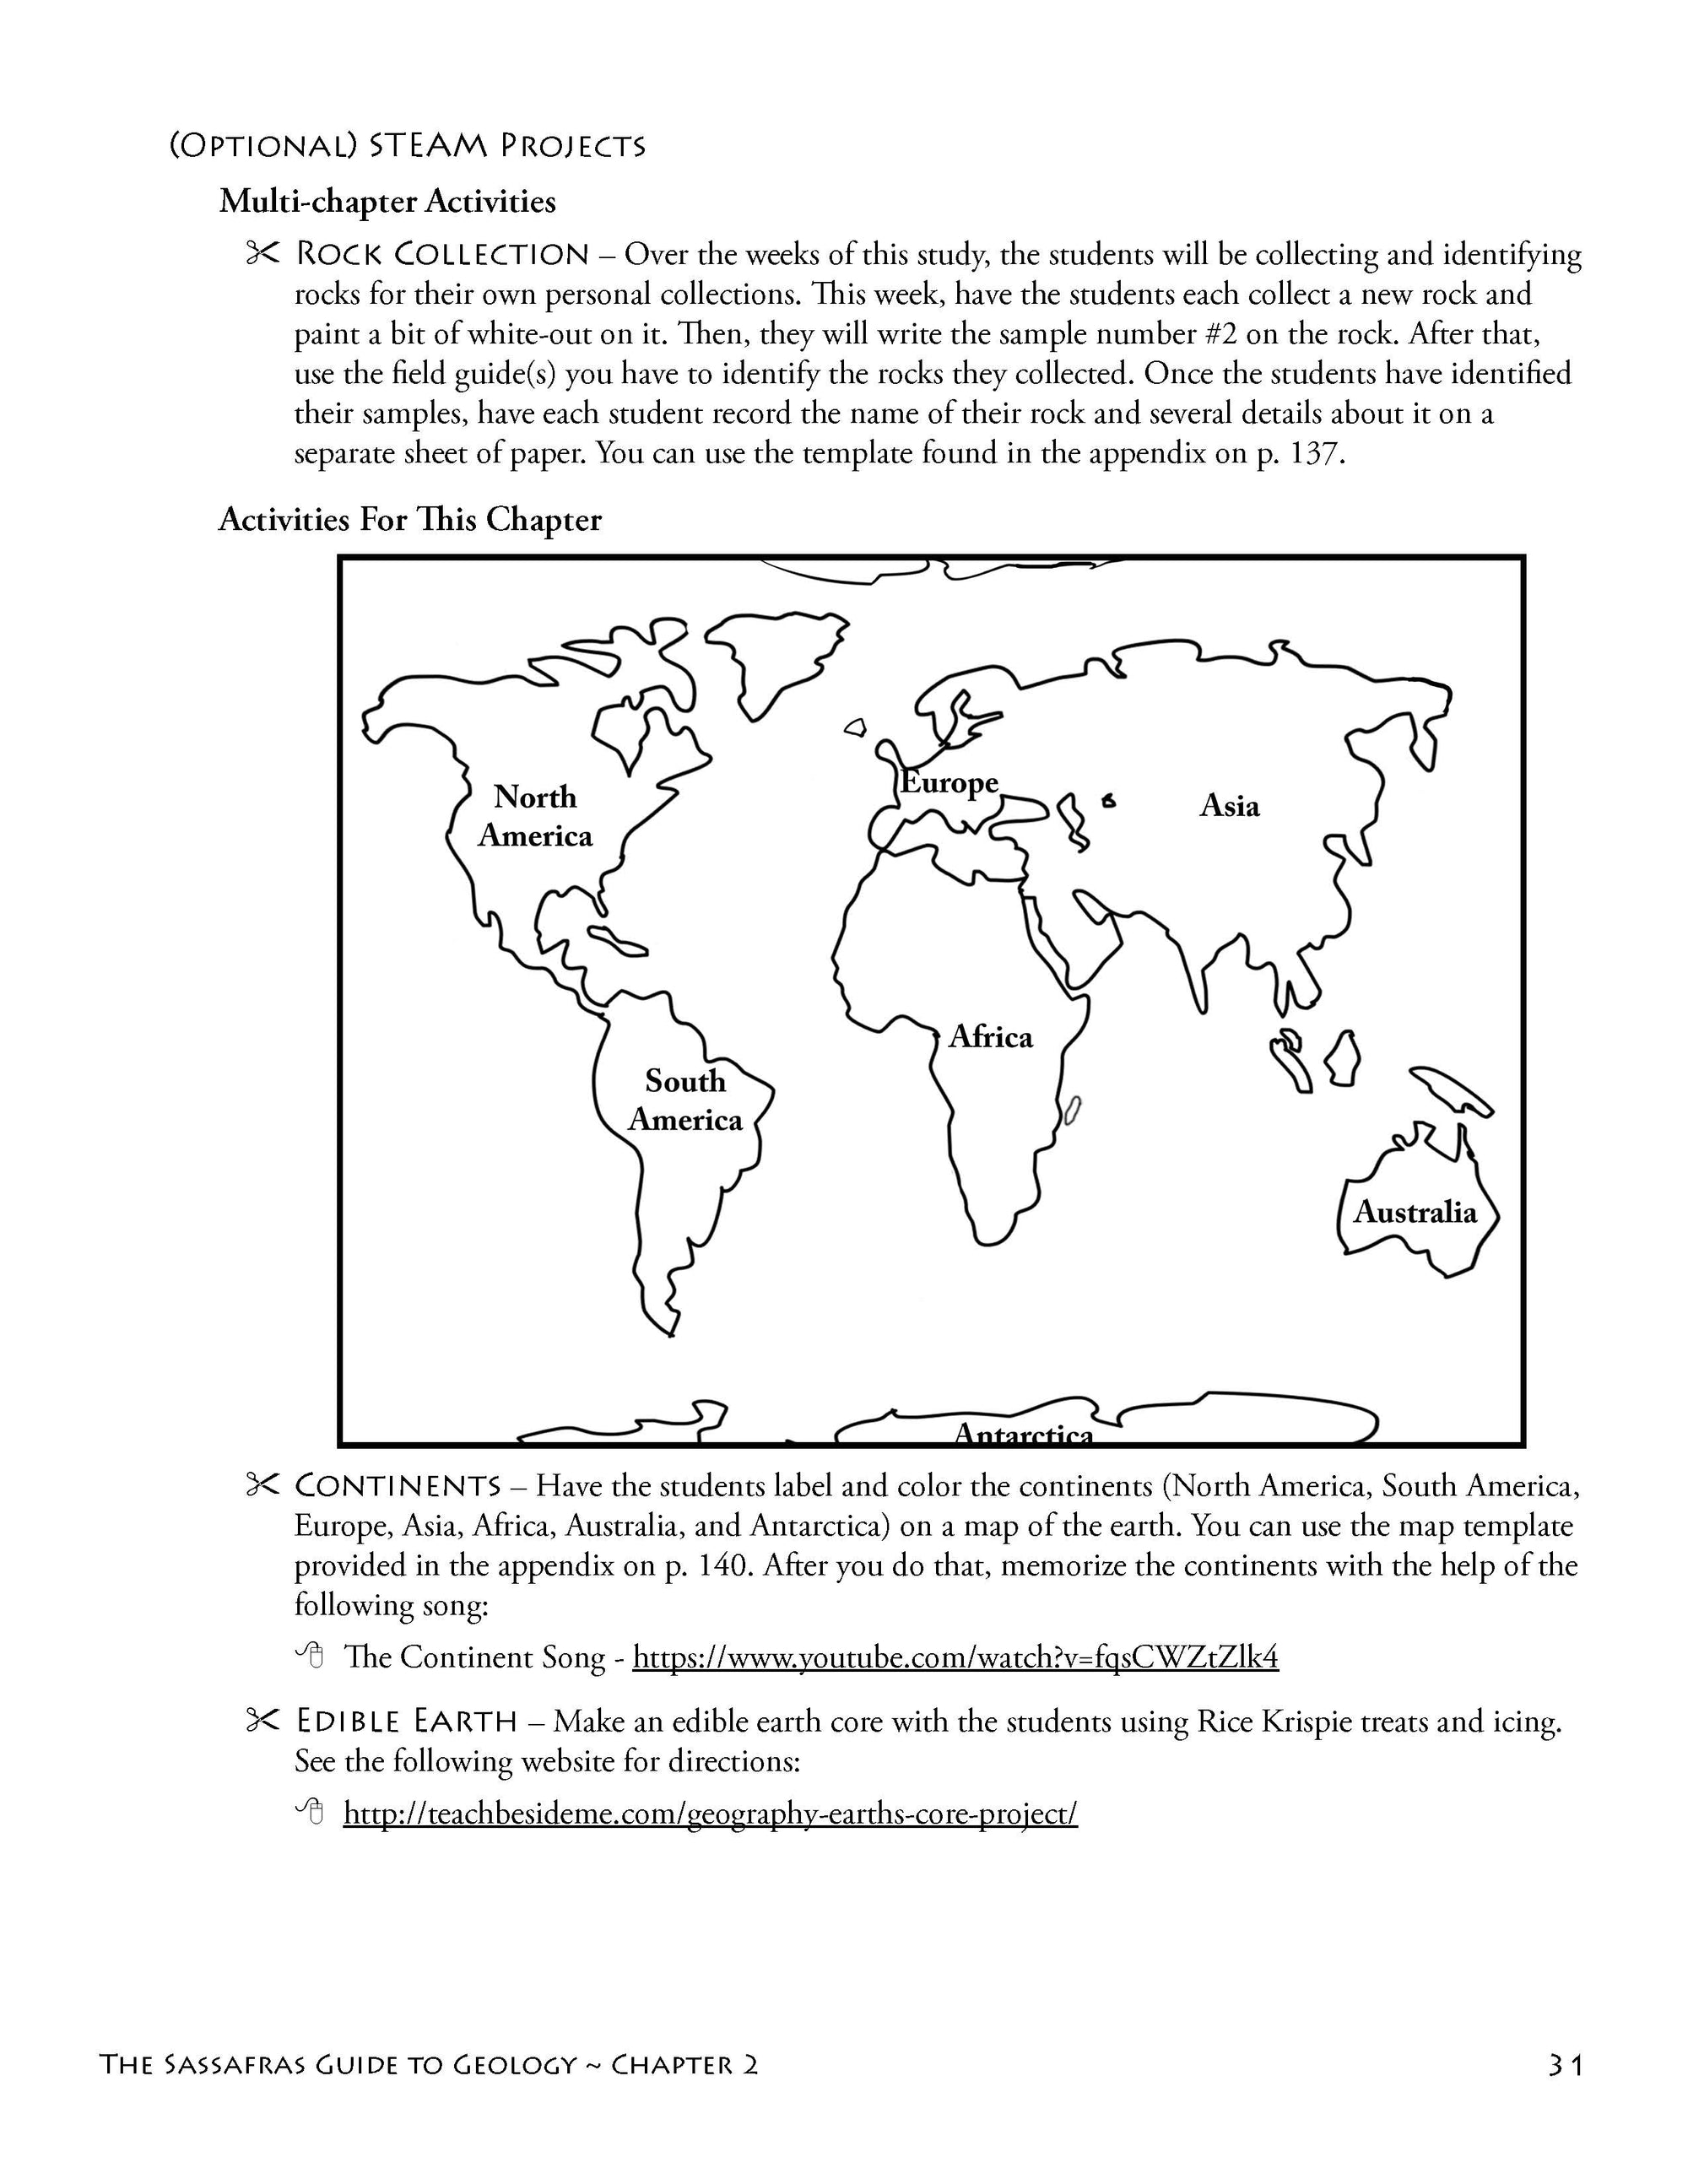 The Sassafras Science Adventures Volume 5: Geology eBook Combo